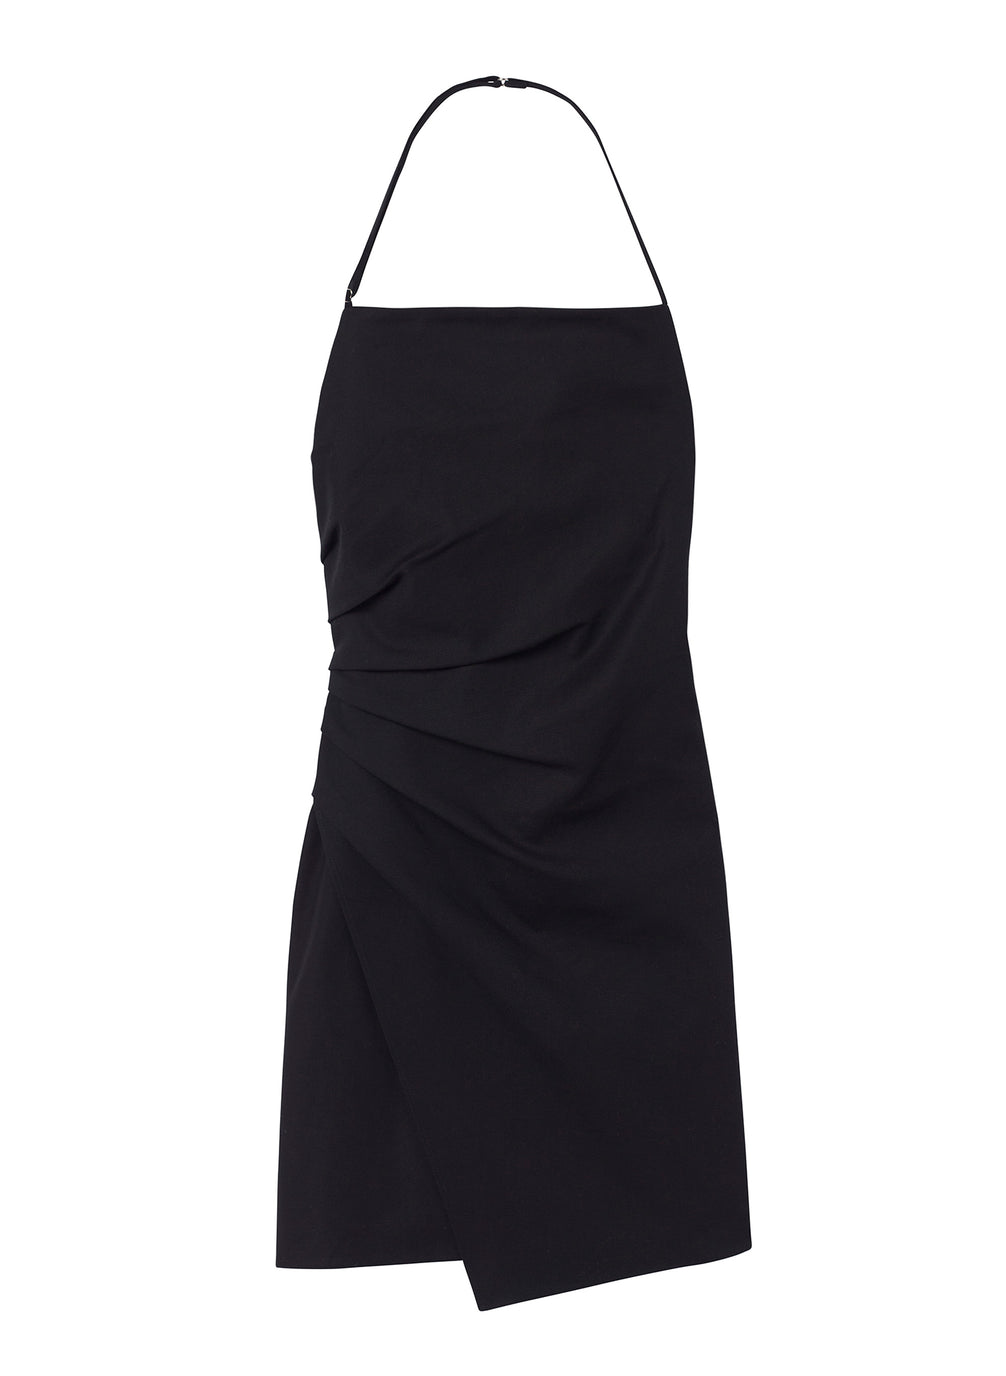 flatlay of black halter mini dress